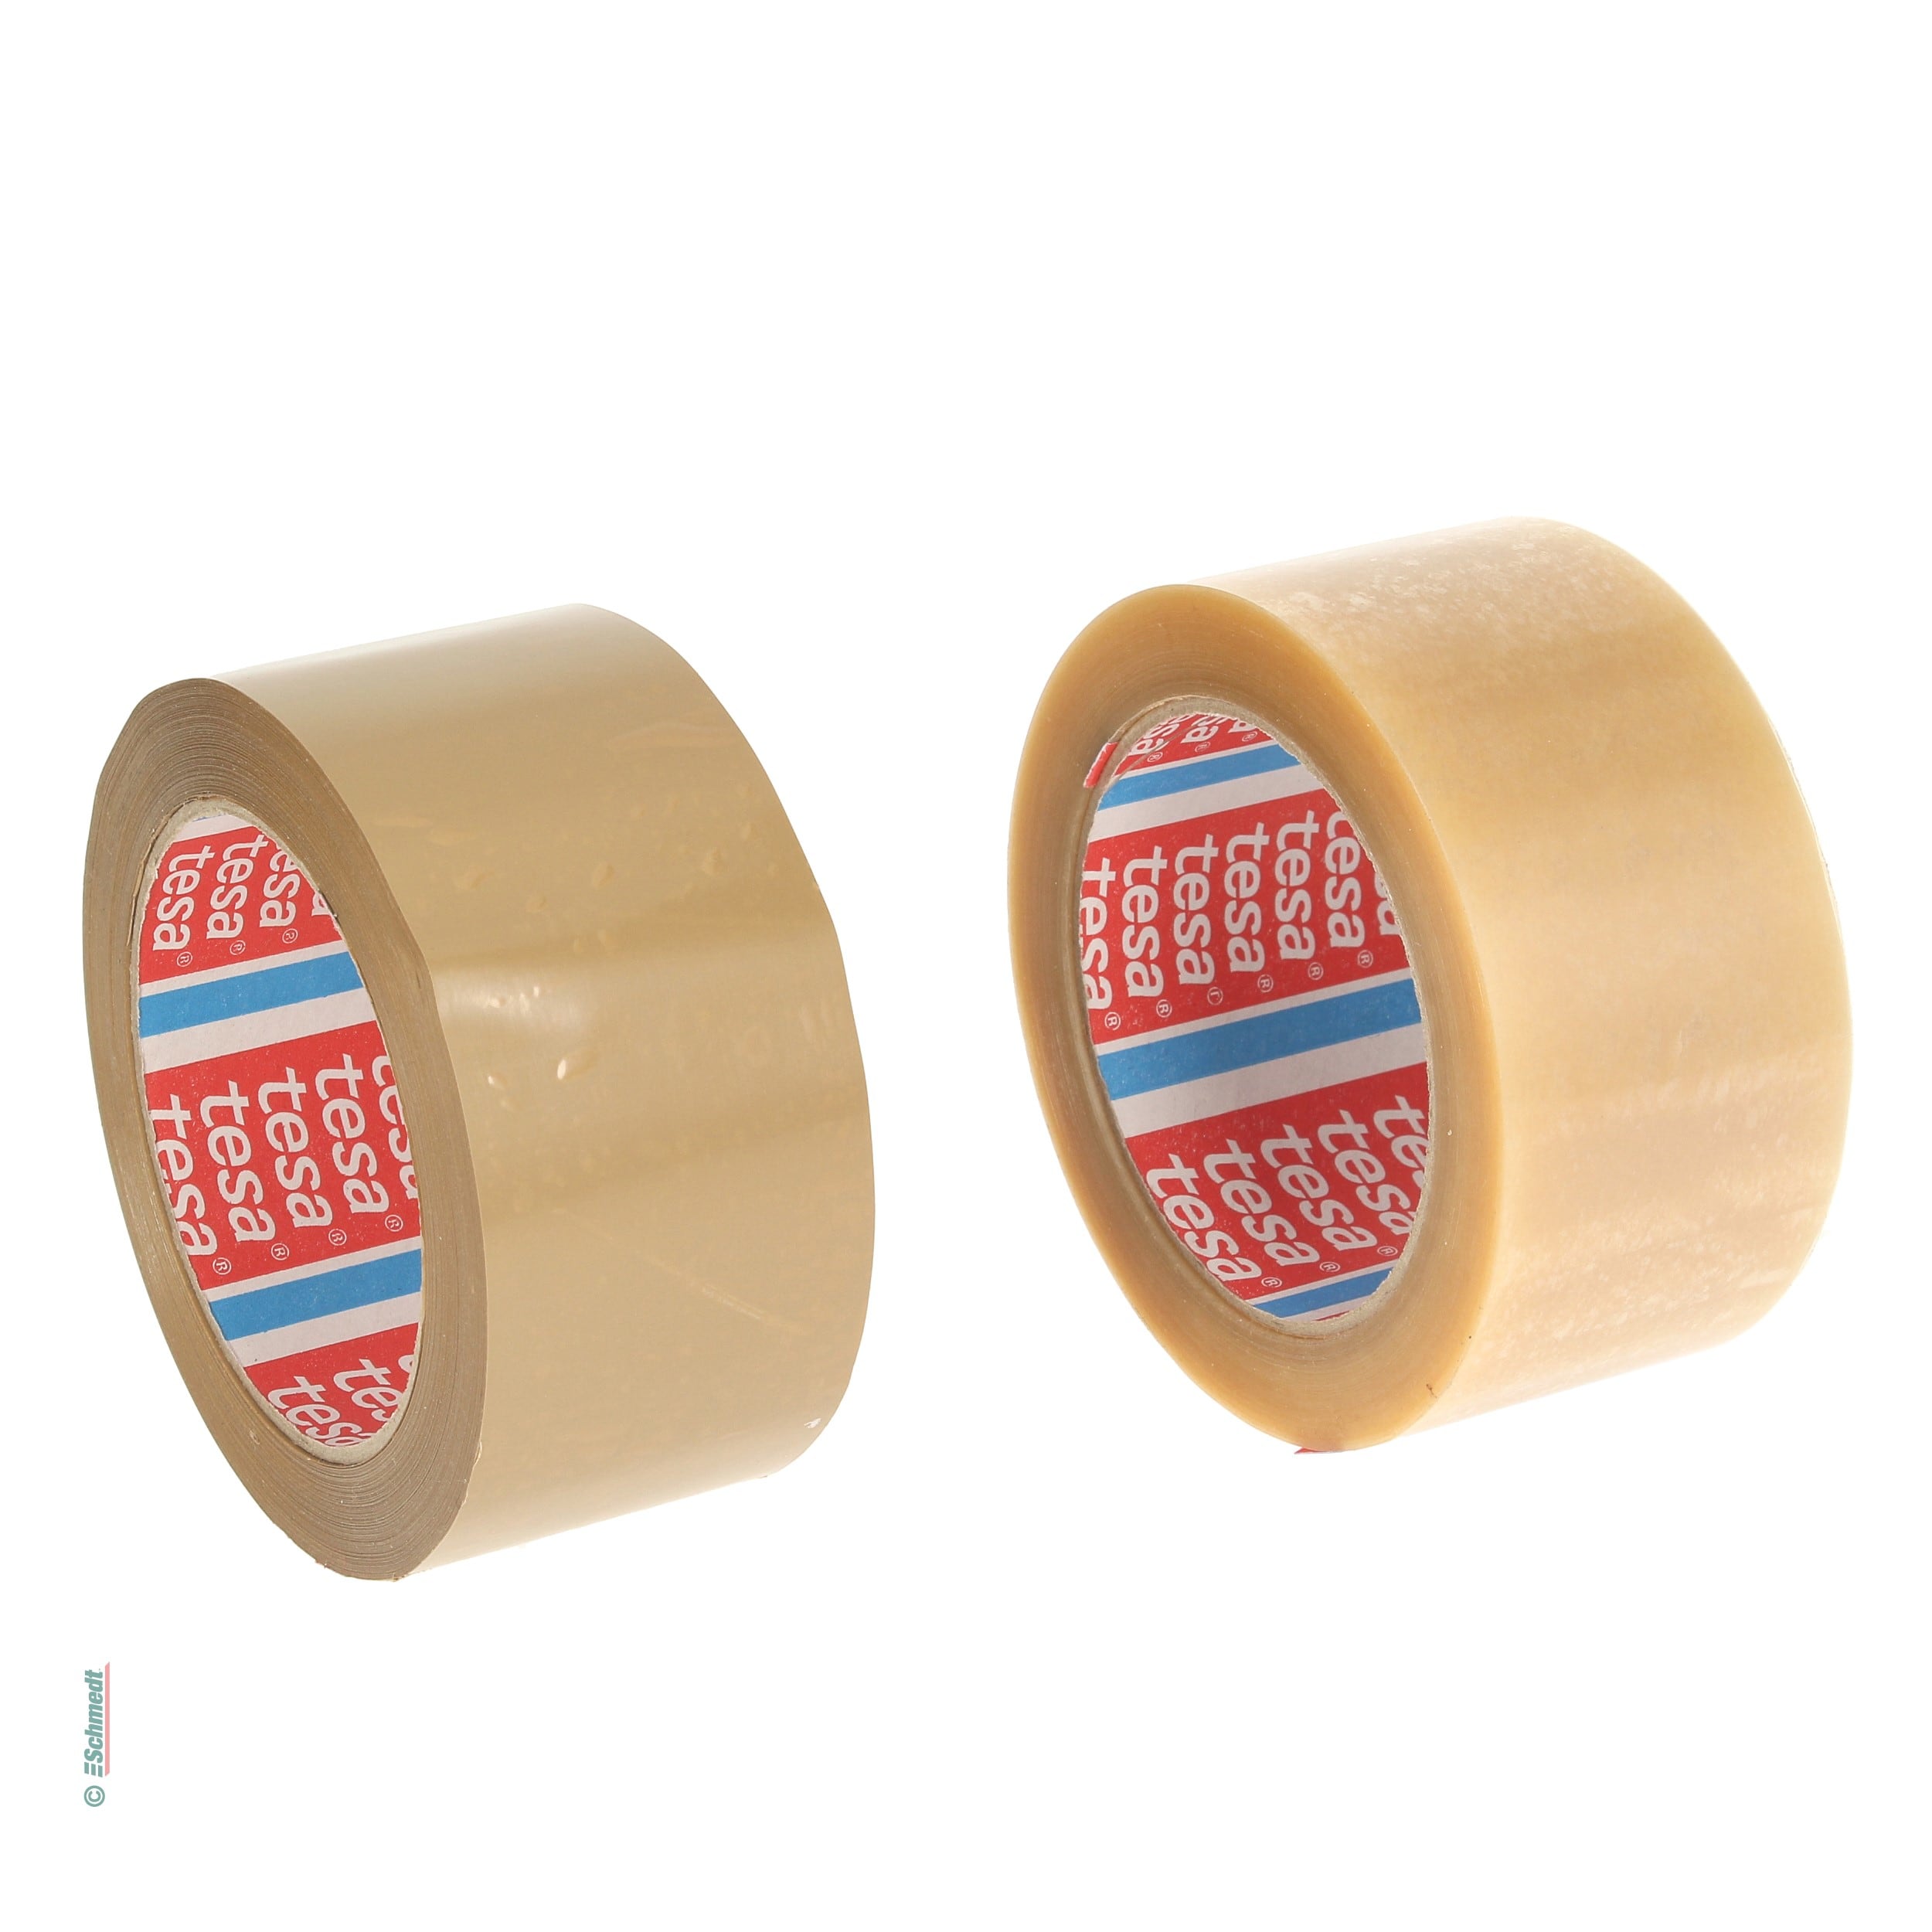 Tesapack 4124 - high-quality self-adhesive packaging tape - sealing of cardboard boxes...